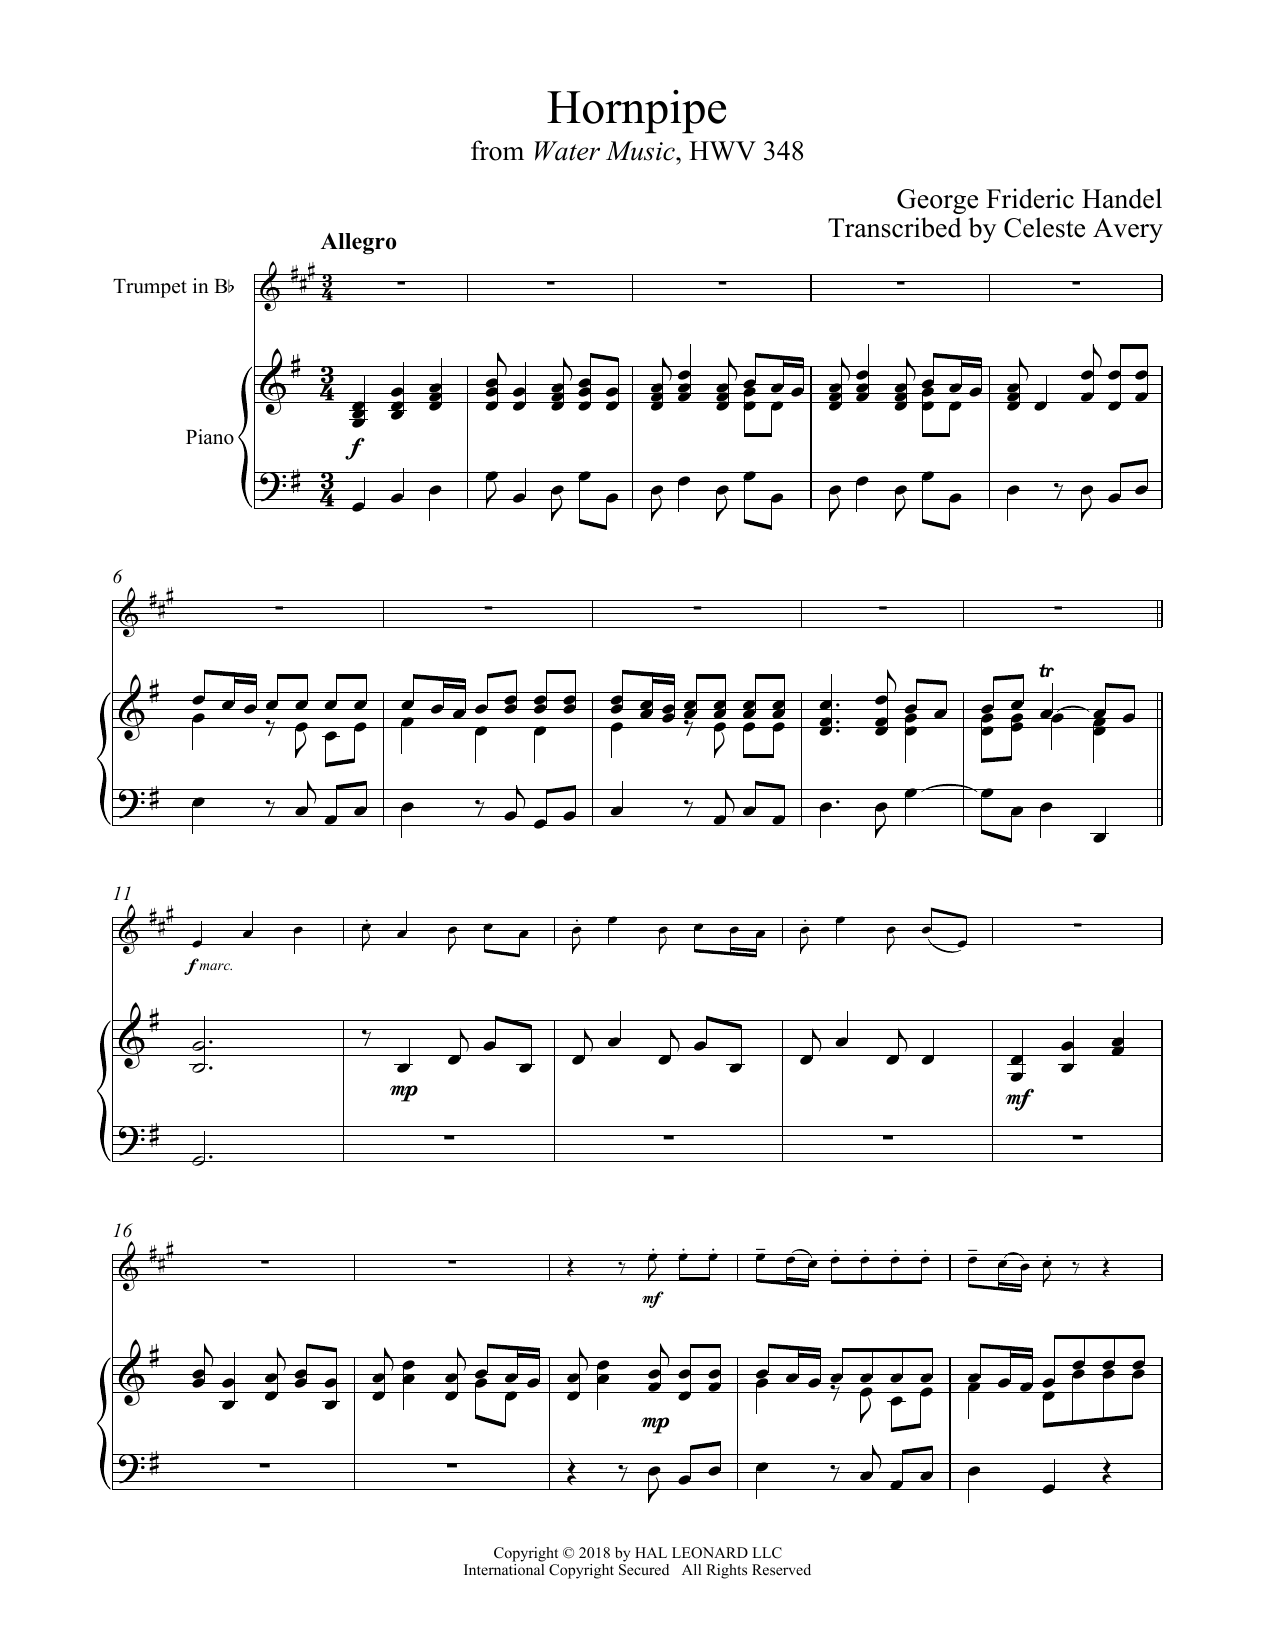 Download George Frideric Handel Hornpipe Sheet Music